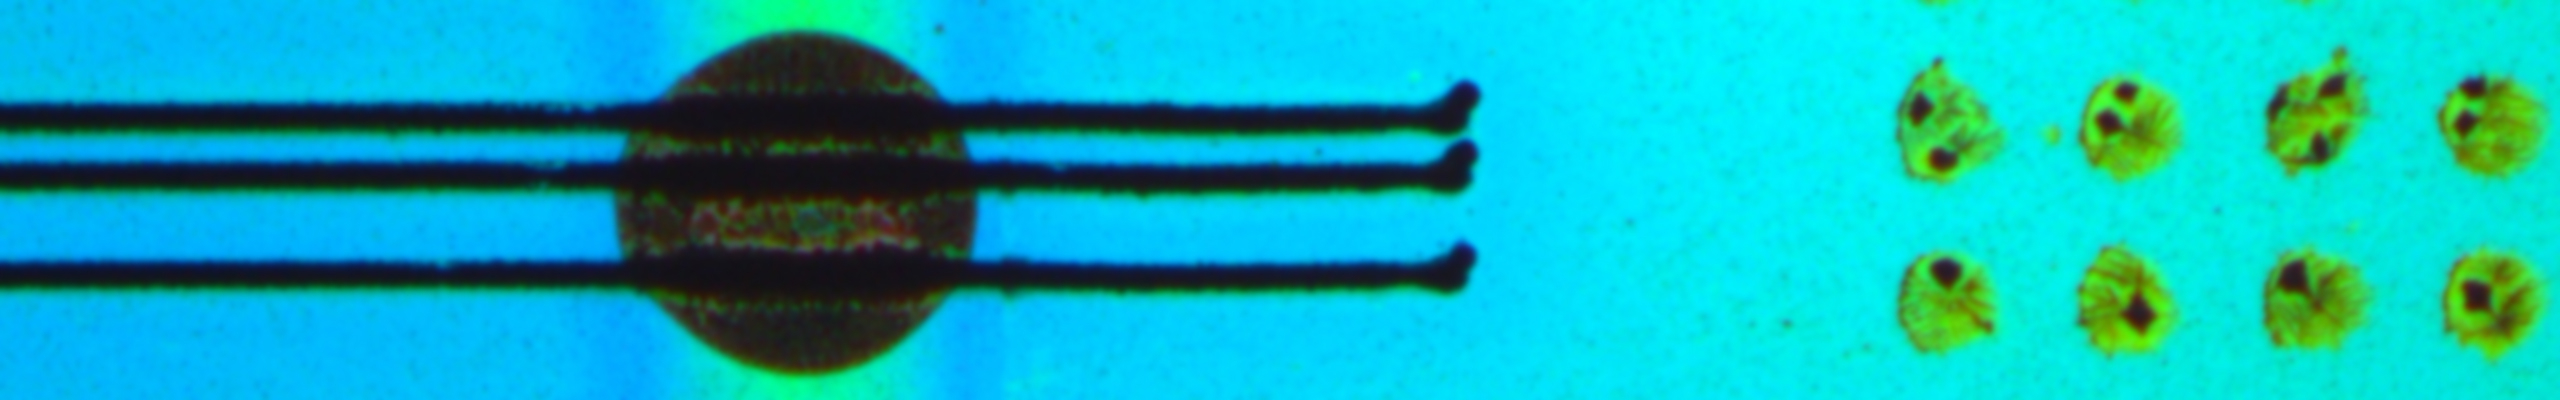 microscope image of biosensors from Chilkoti lab